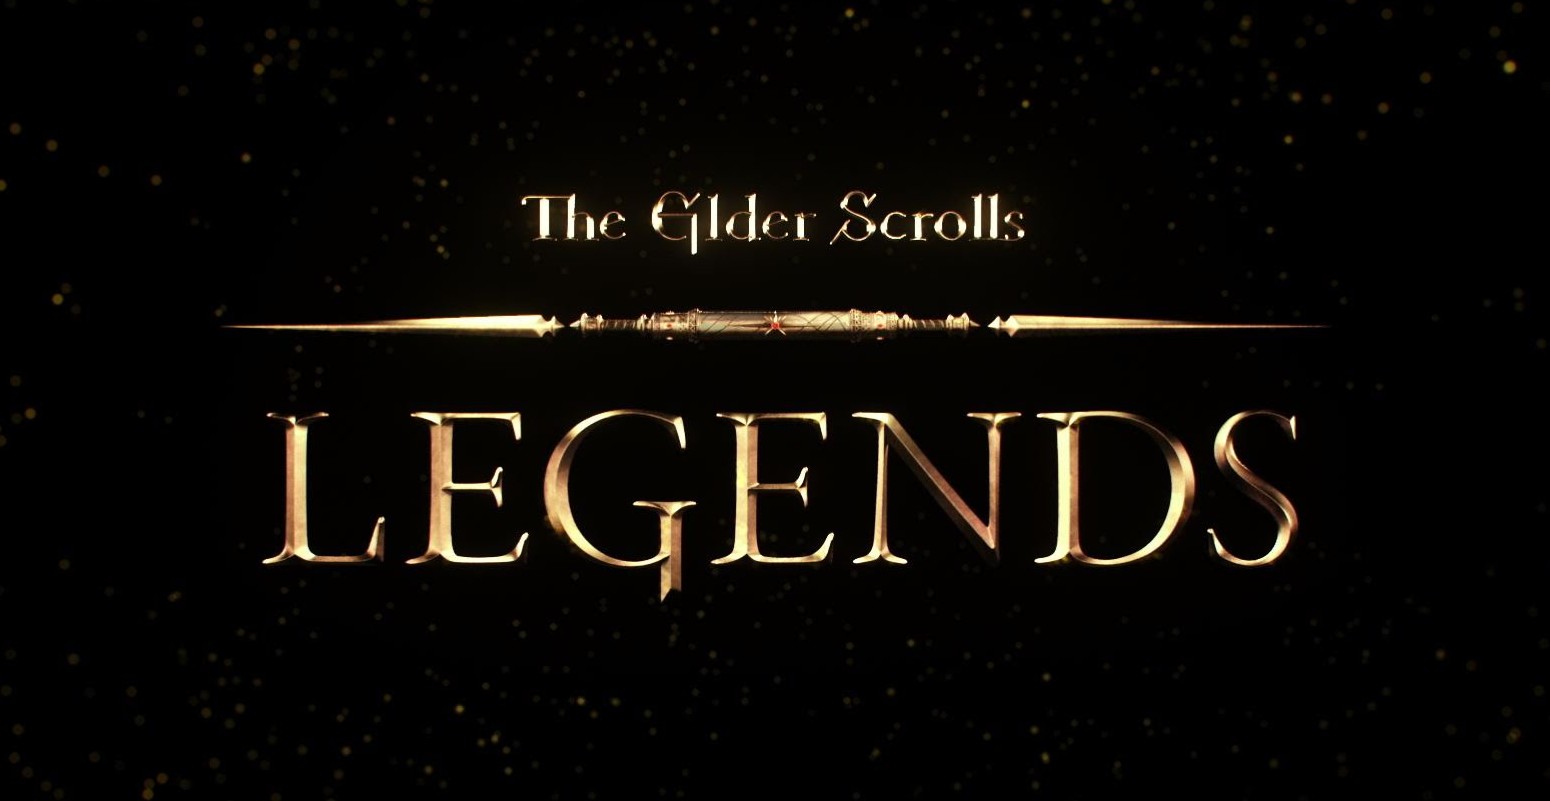 The Elder Scrolls : Legends